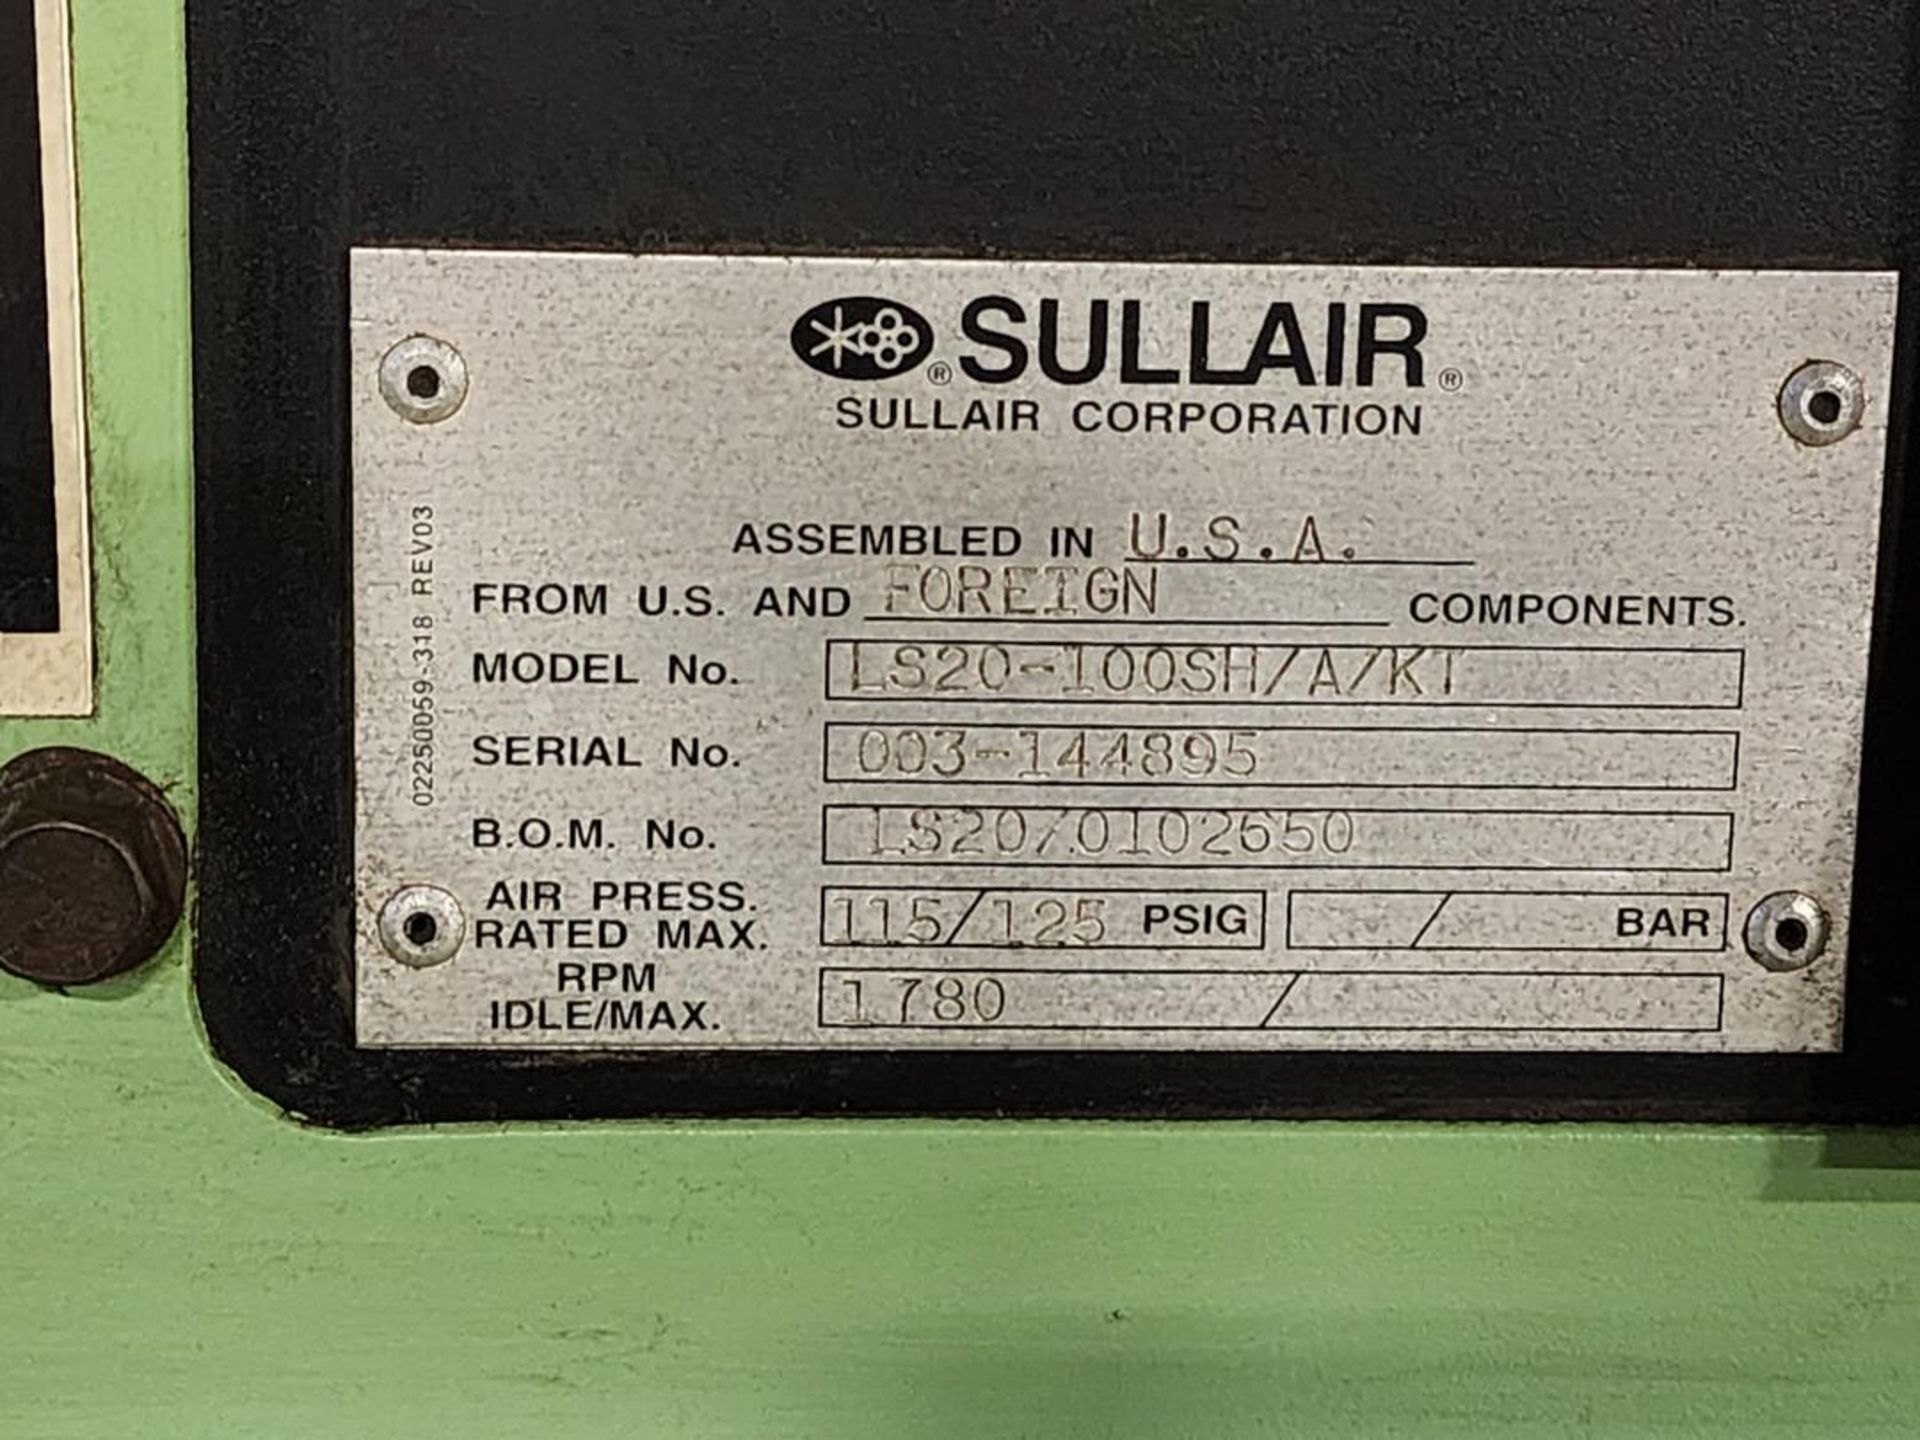 Sullair LS20-100SH/A/KT Air Compressor Air Press. Rated Min: 115/125psi, RPM: 1780 - Image 7 of 12